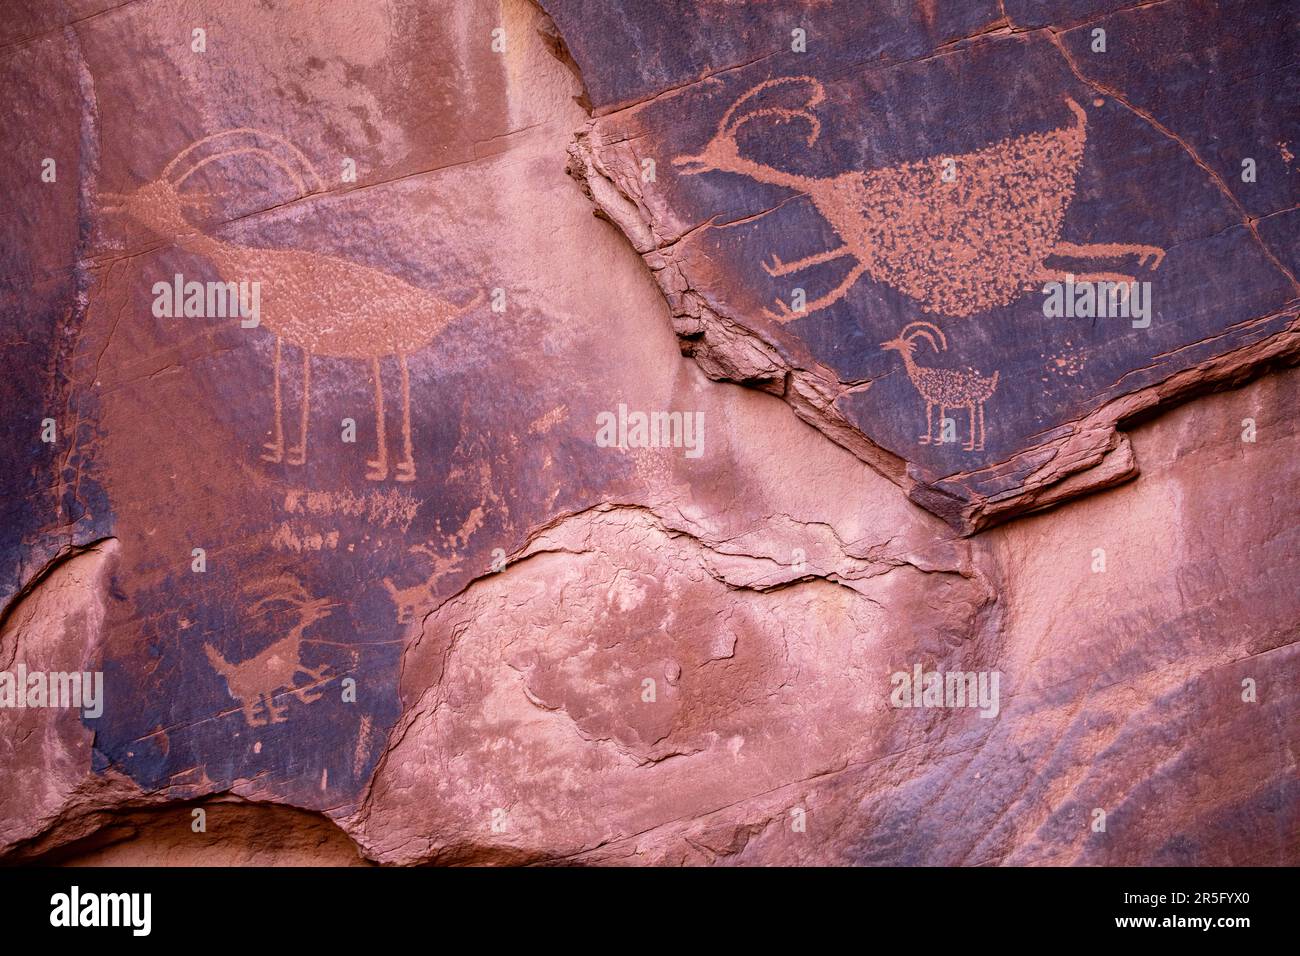 Anasazi Suns Eye petroglyphs at Monument Valley Navajo Tribal Park, Arizona, USA Stock Photo